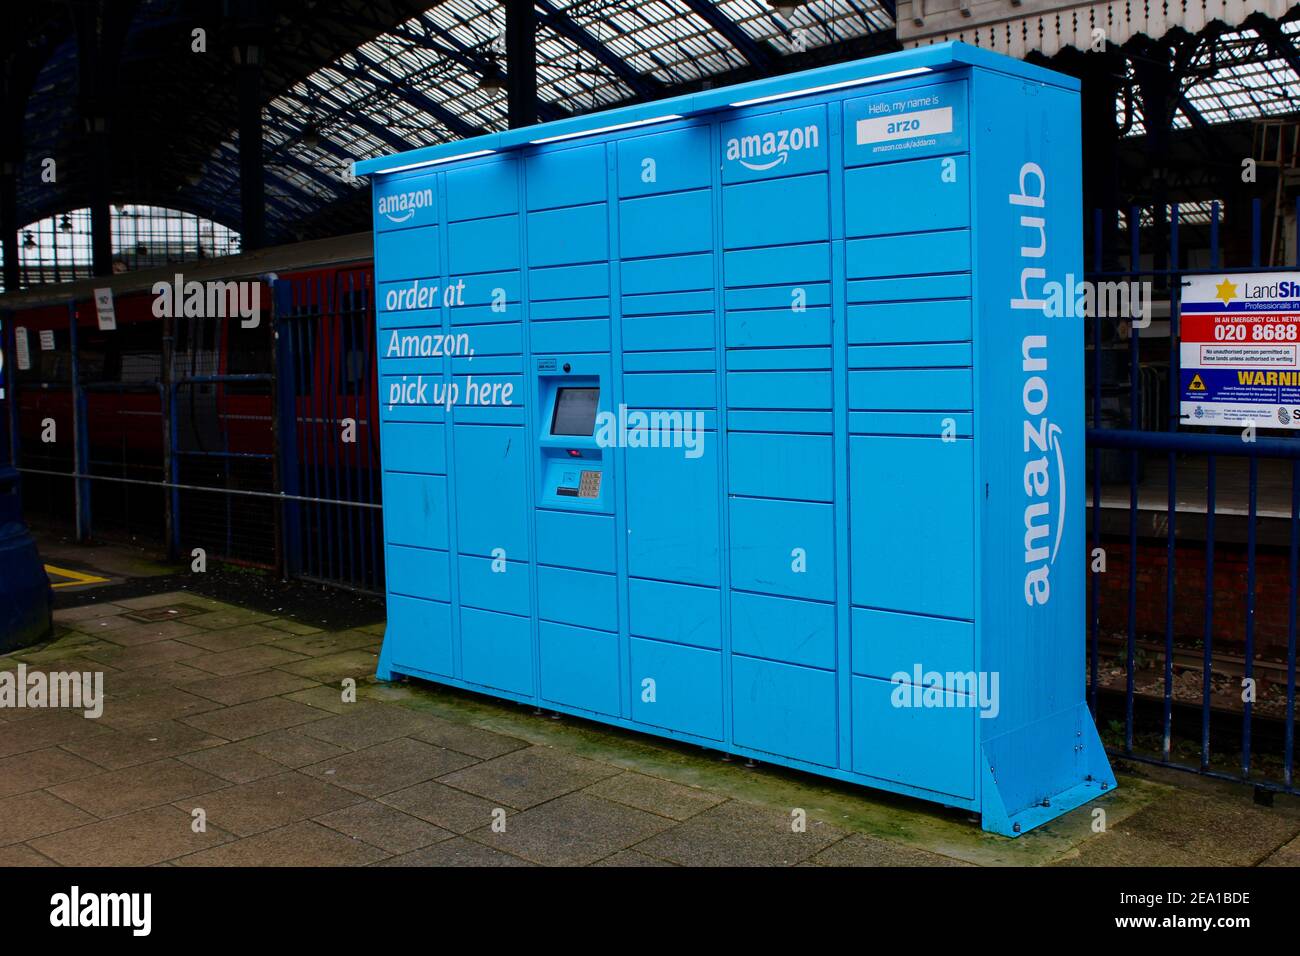 Amazon collection hub at Brighton Station, England Stock Photo